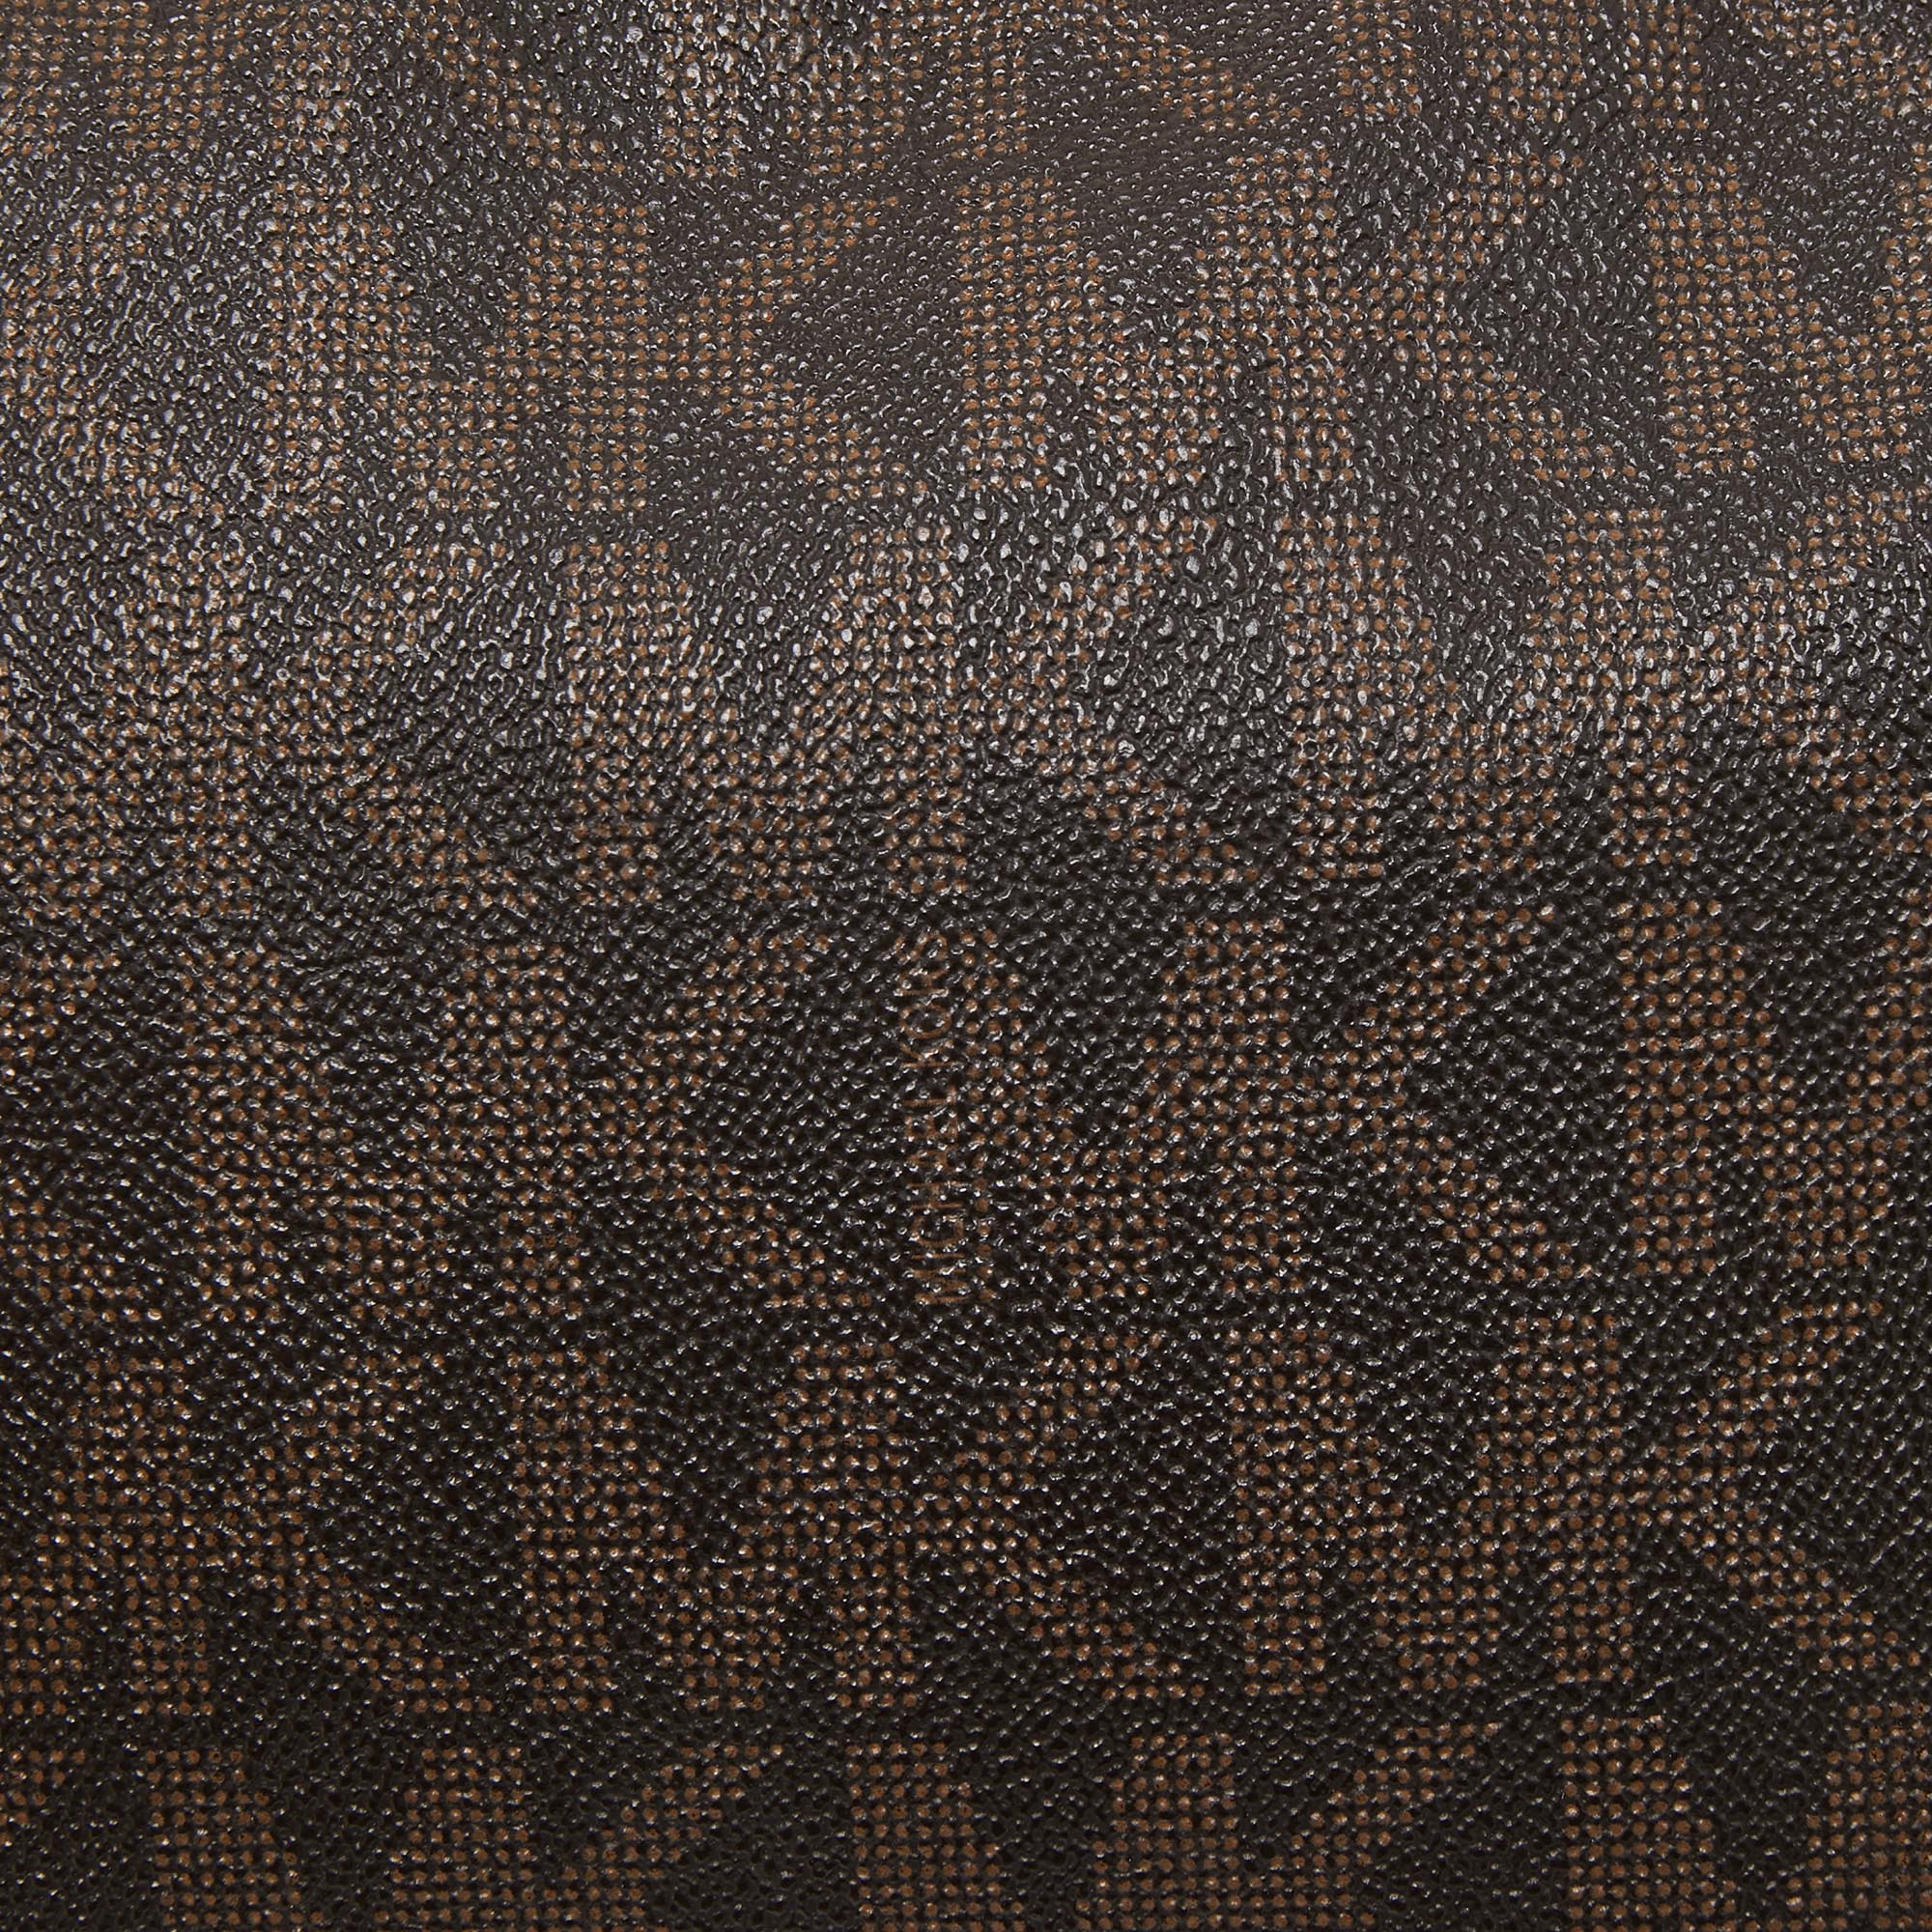 Michael Kors Dark Brown Signature Coated Canvas And Leather Zip Crossbody Bag